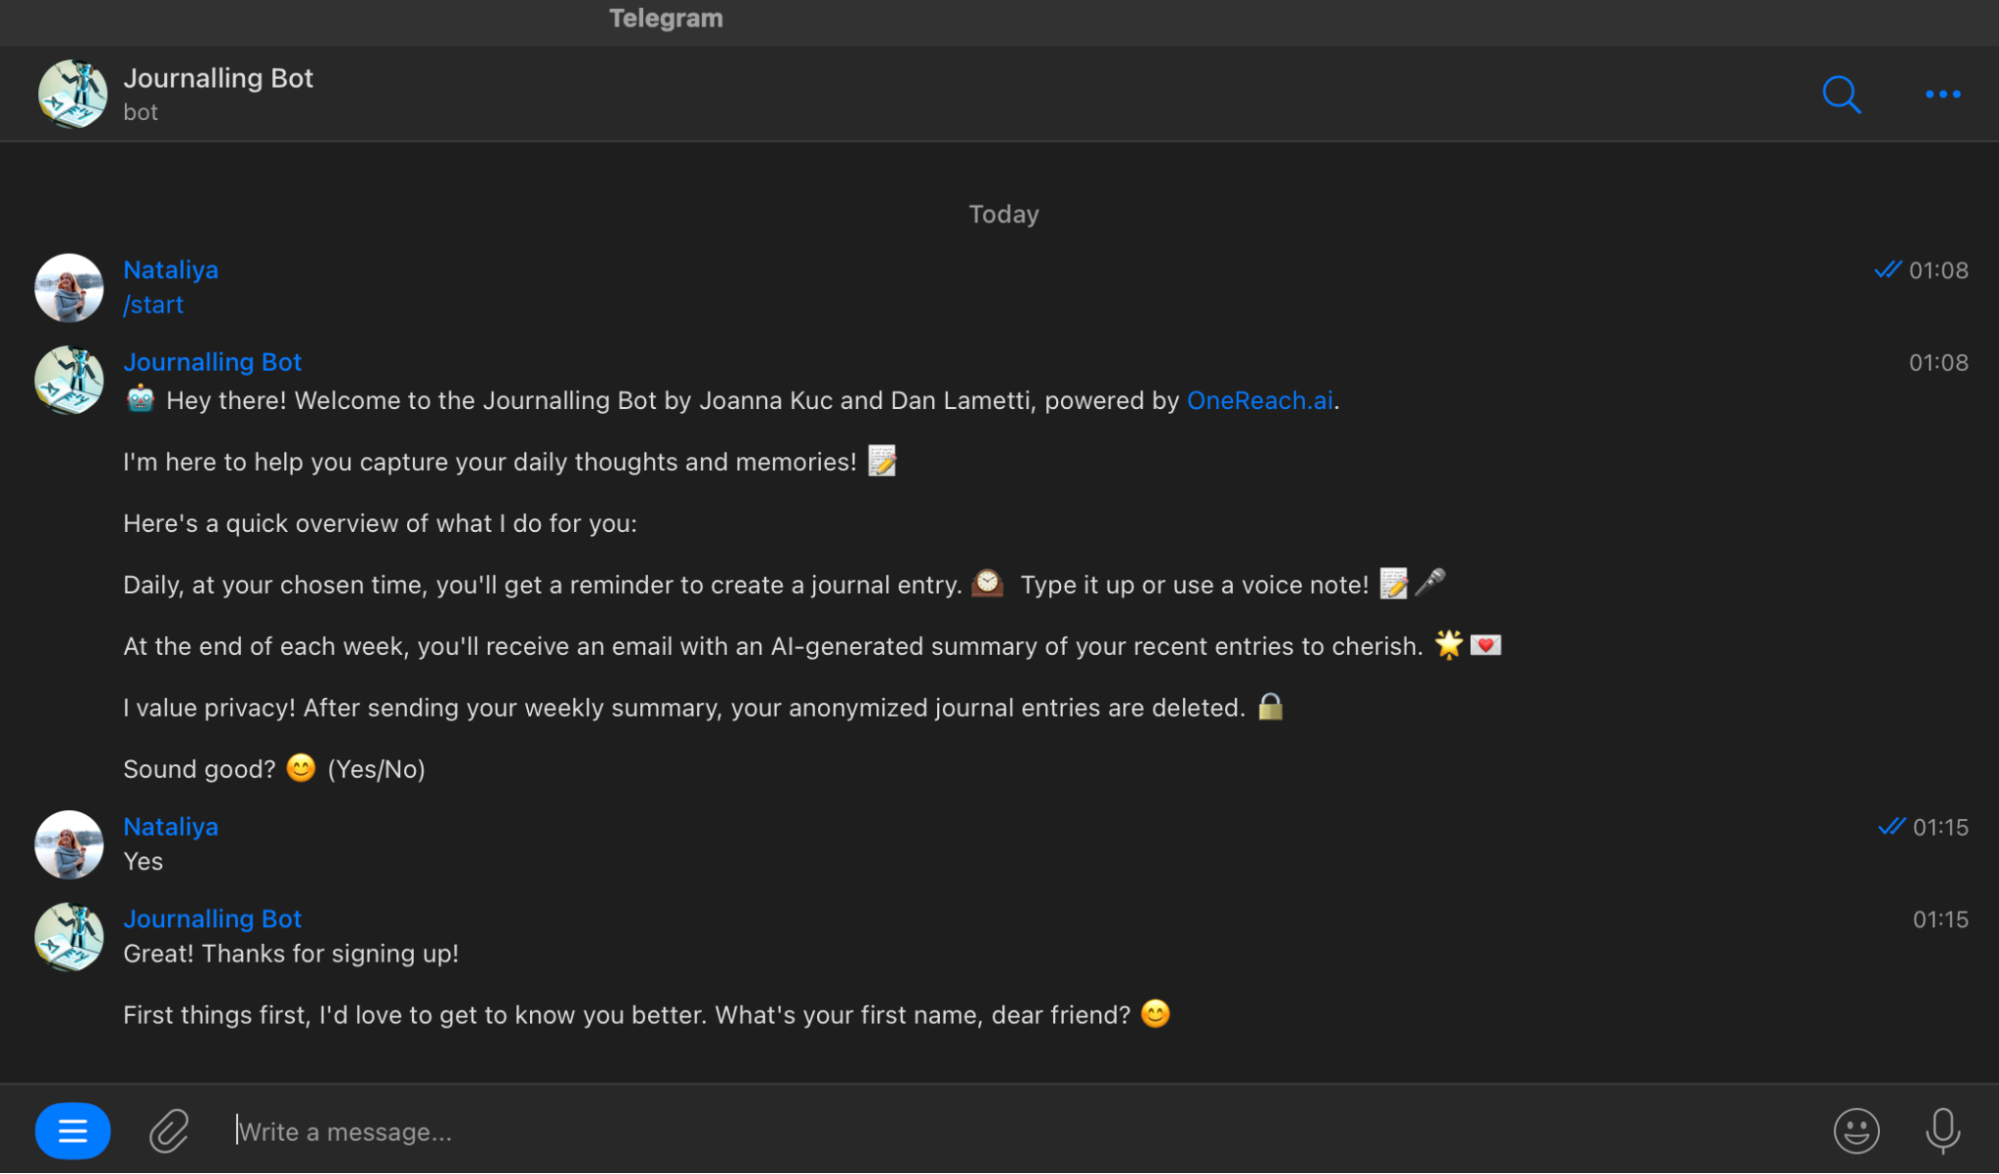 A pilot version of a Telegram-based Journalling Bot can be found via the link: https://telegram.me/journallingbot